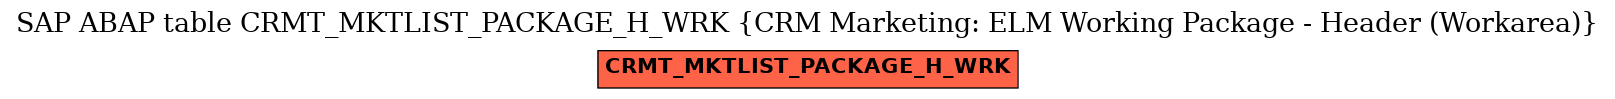 E-R Diagram for table CRMT_MKTLIST_PACKAGE_H_WRK (CRM Marketing: ELM Working Package - Header (Workarea))